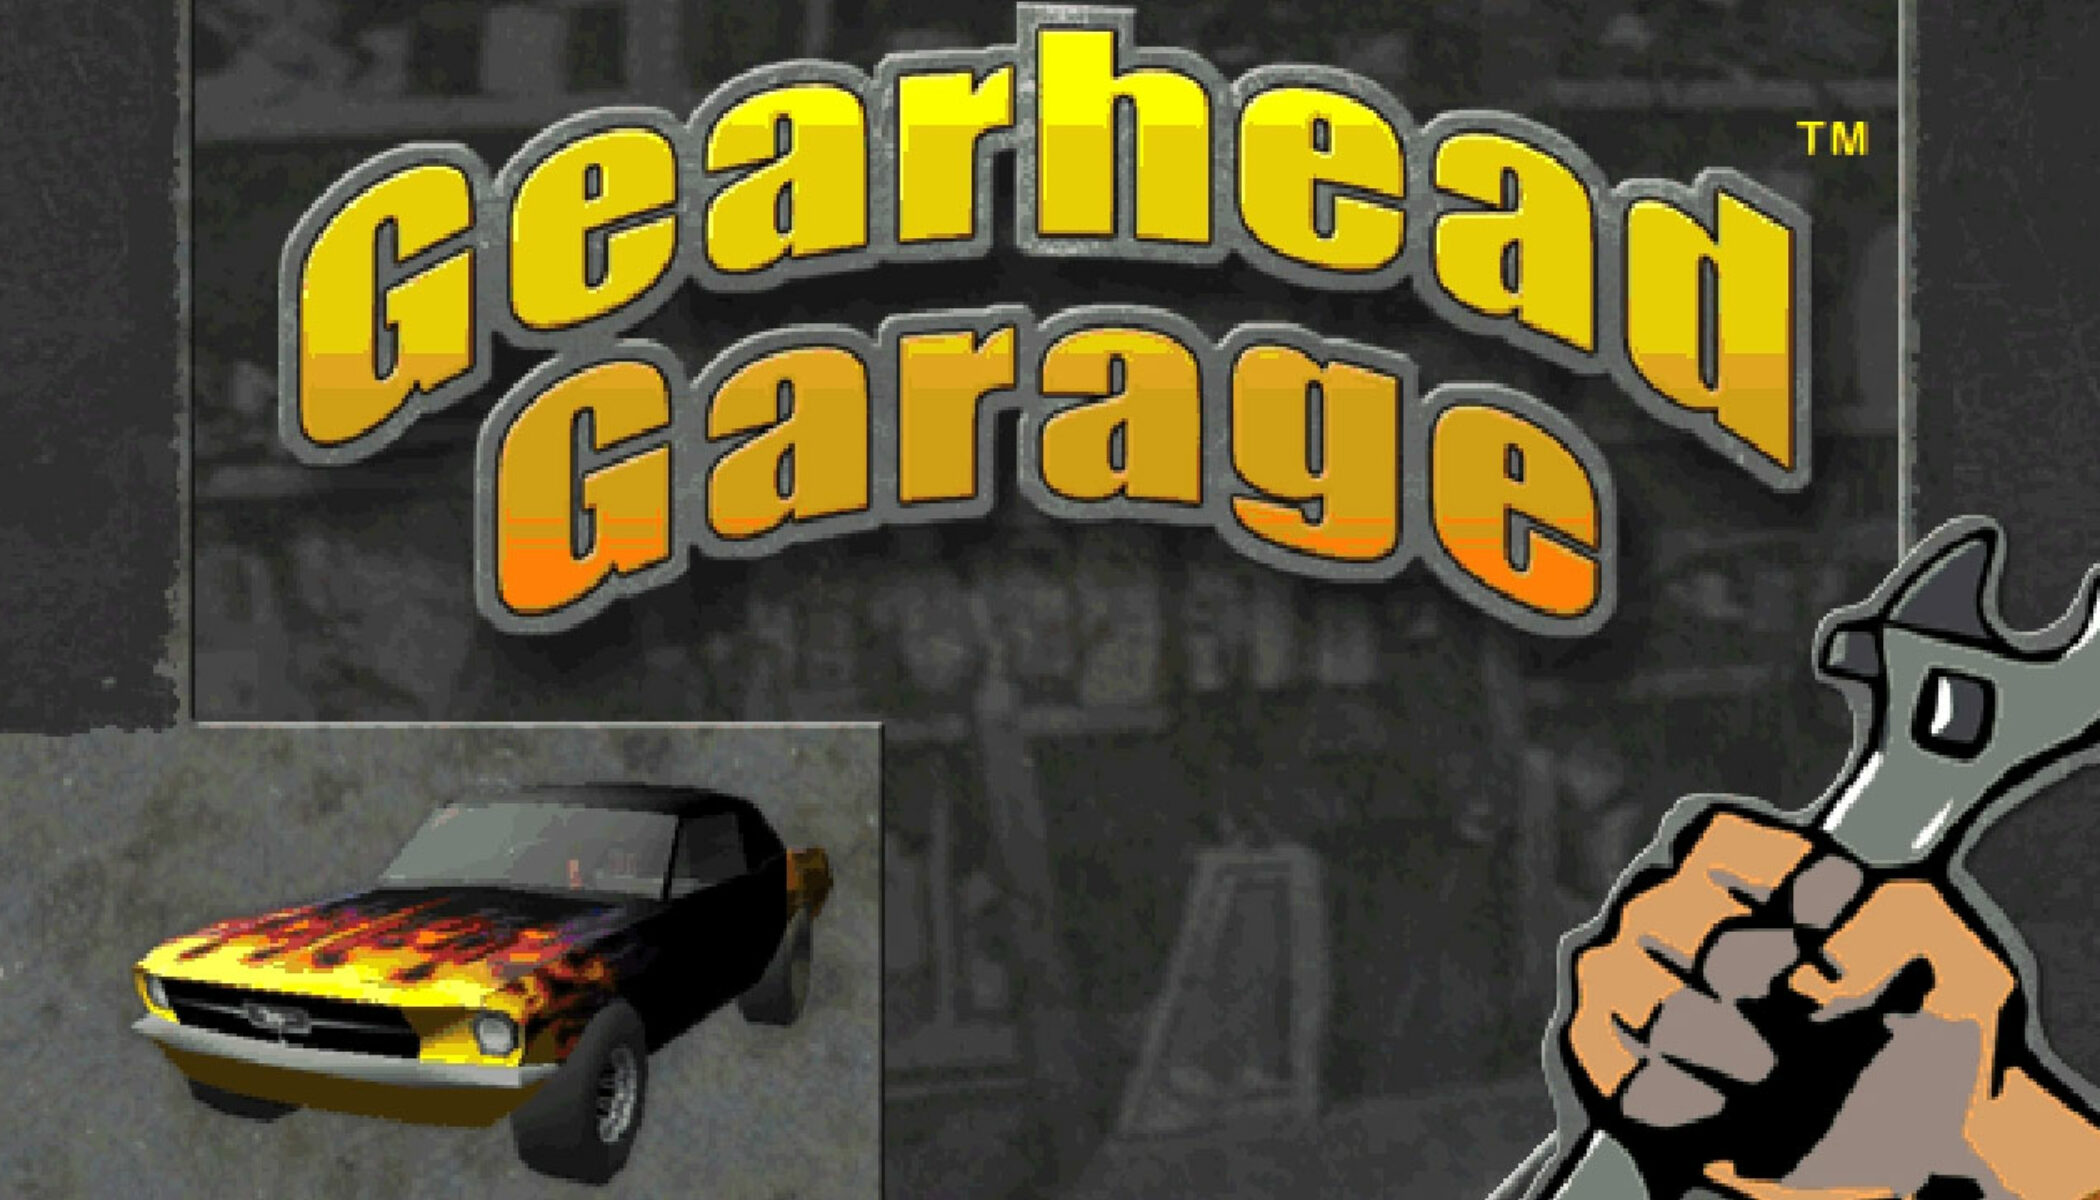 gearhead garage windows 7